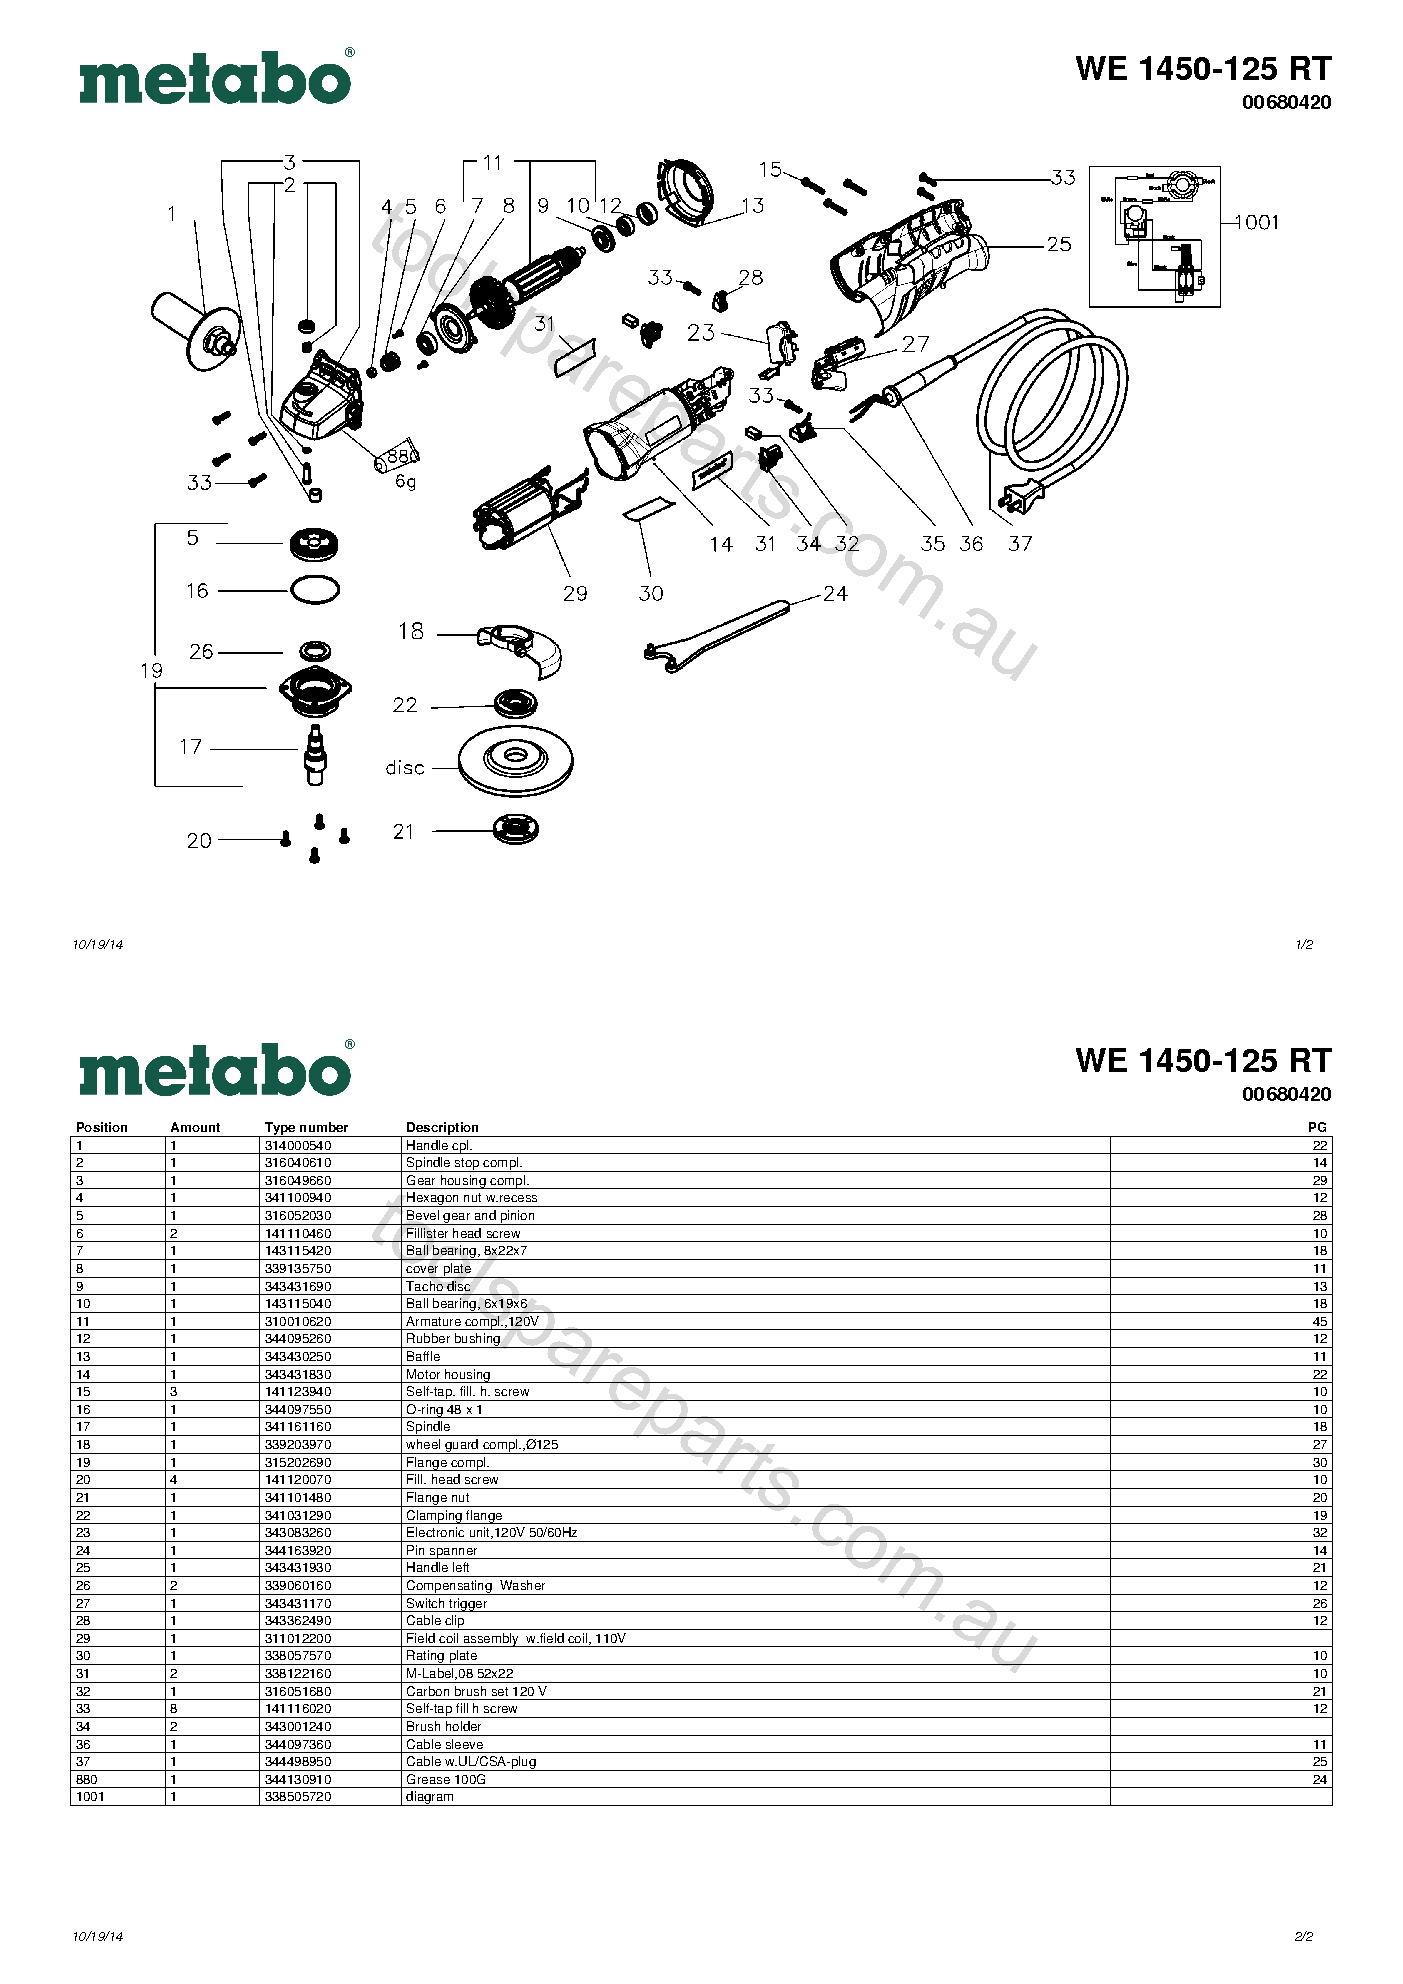 Metabo WE 1450-125 RT 00680420  Diagram 1